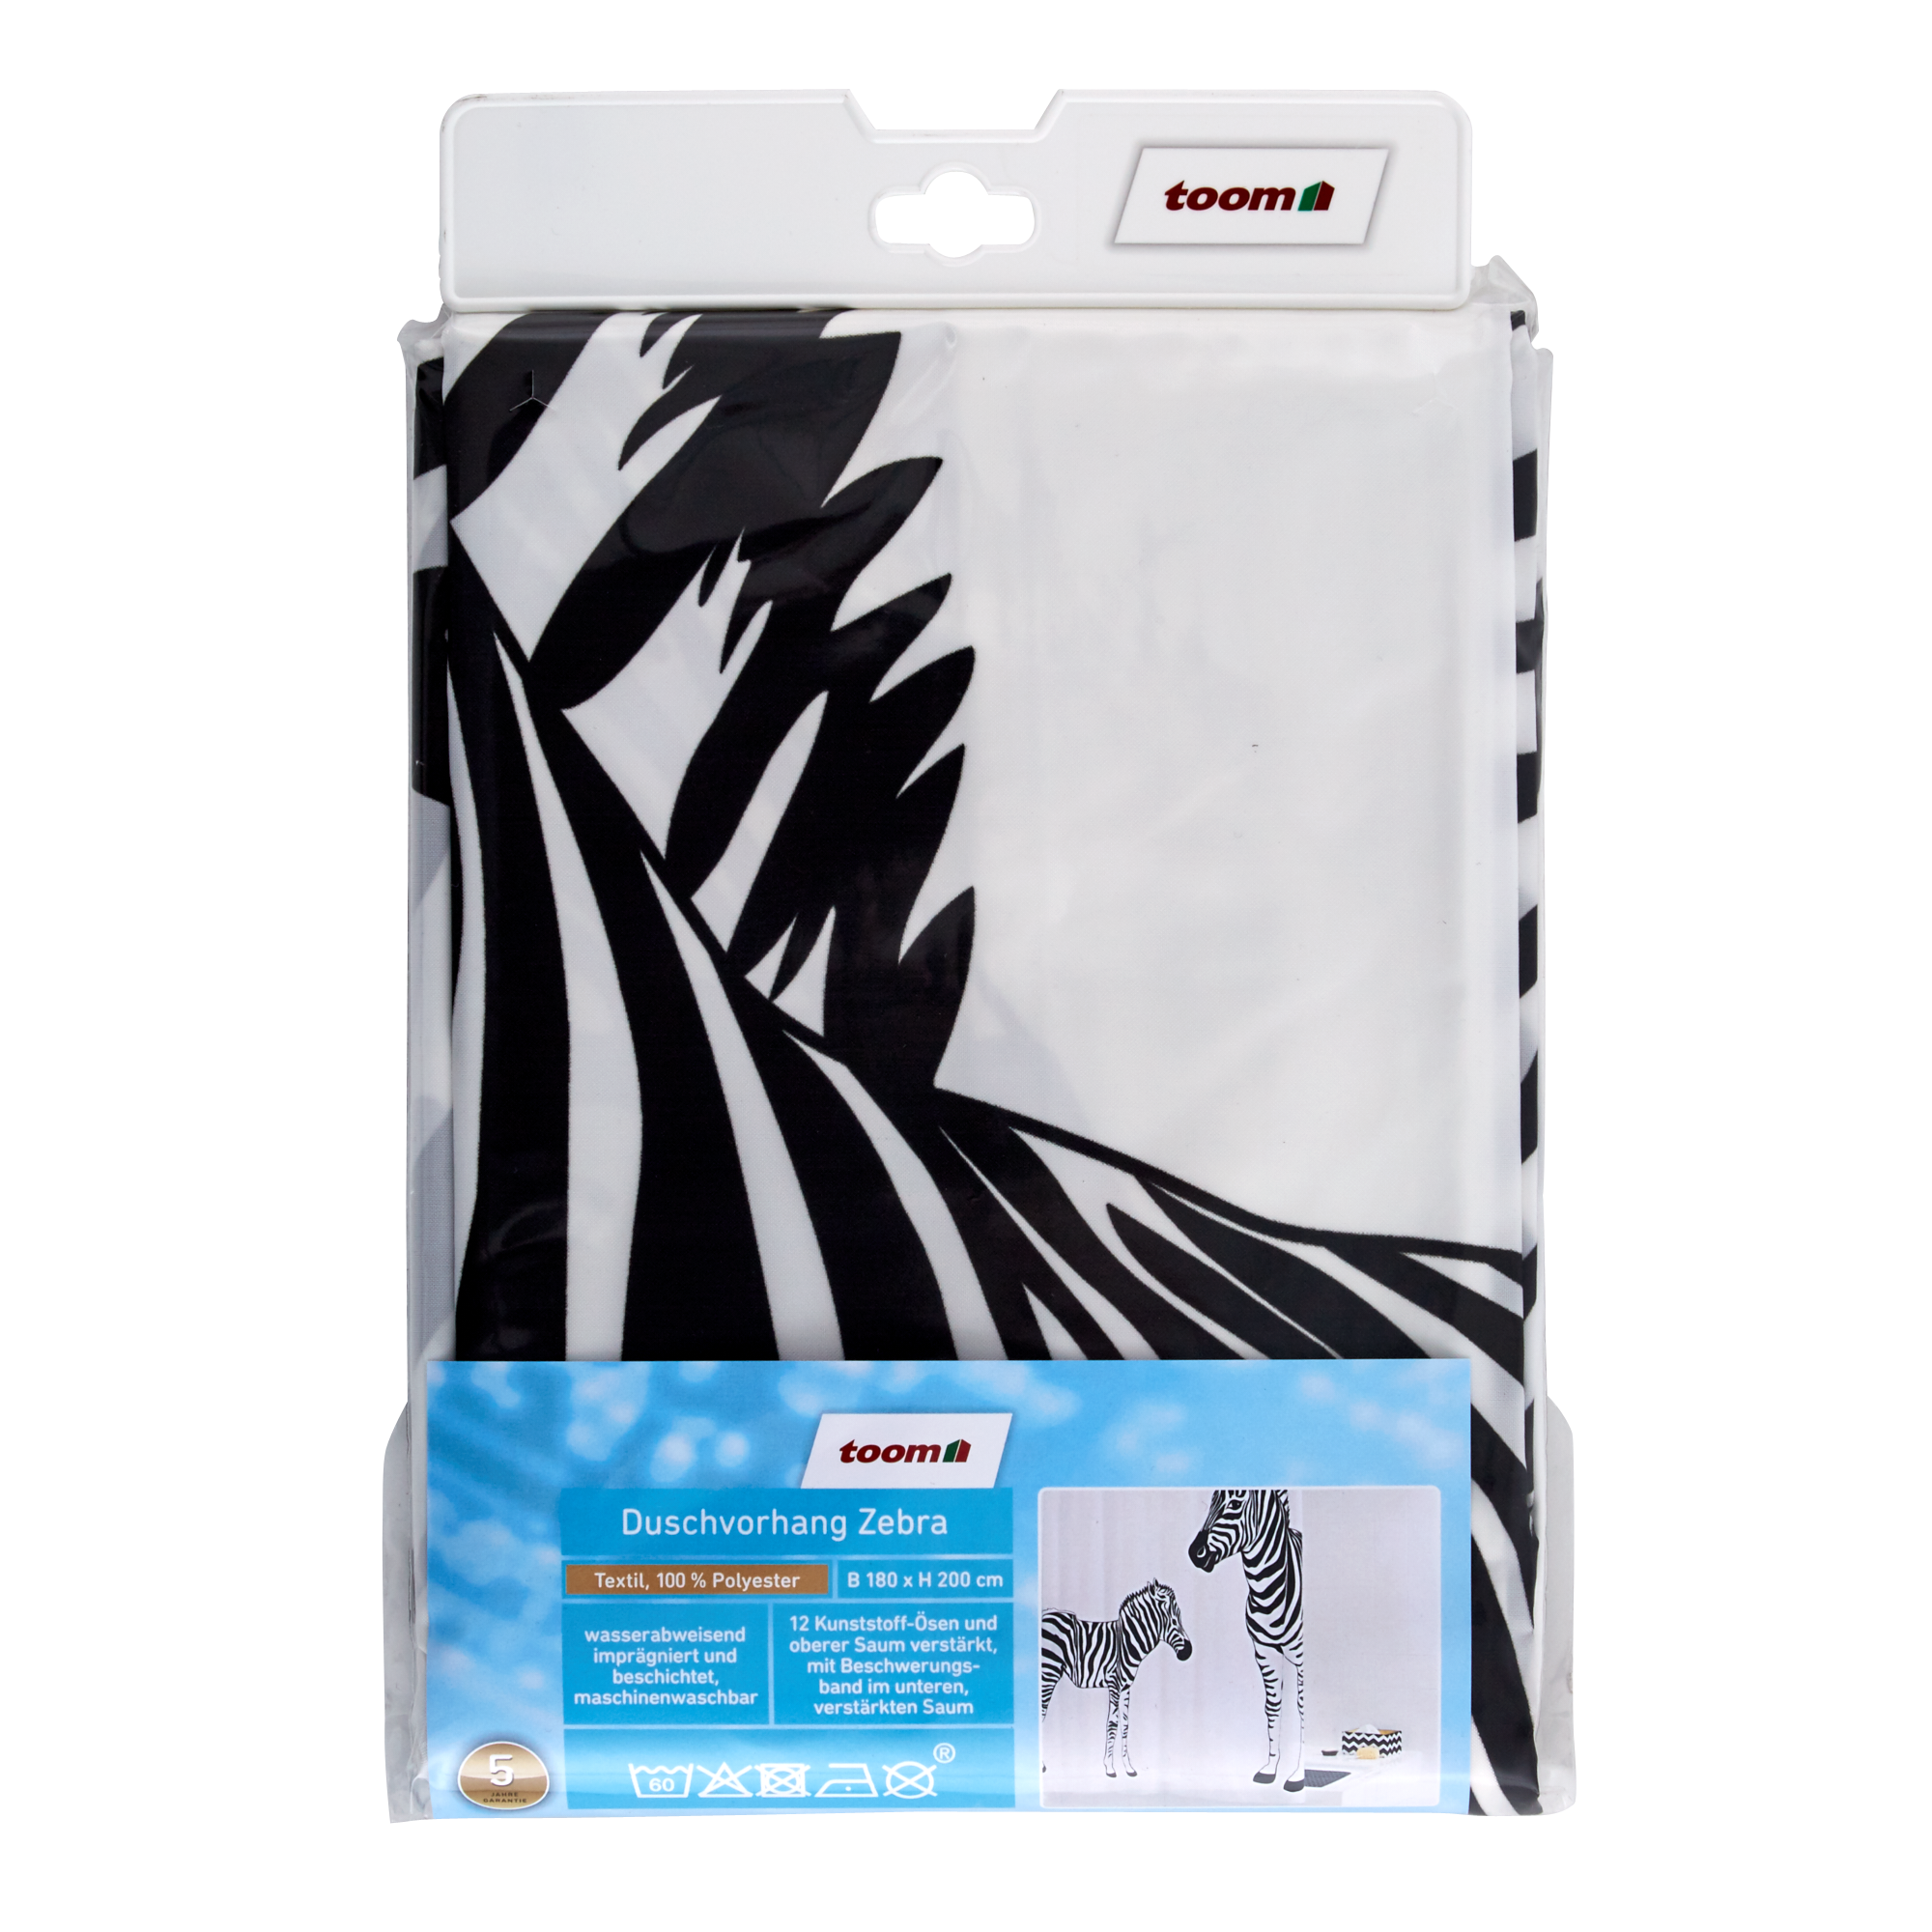 Duschvorhang Zebra 180 x 200 cm + product picture